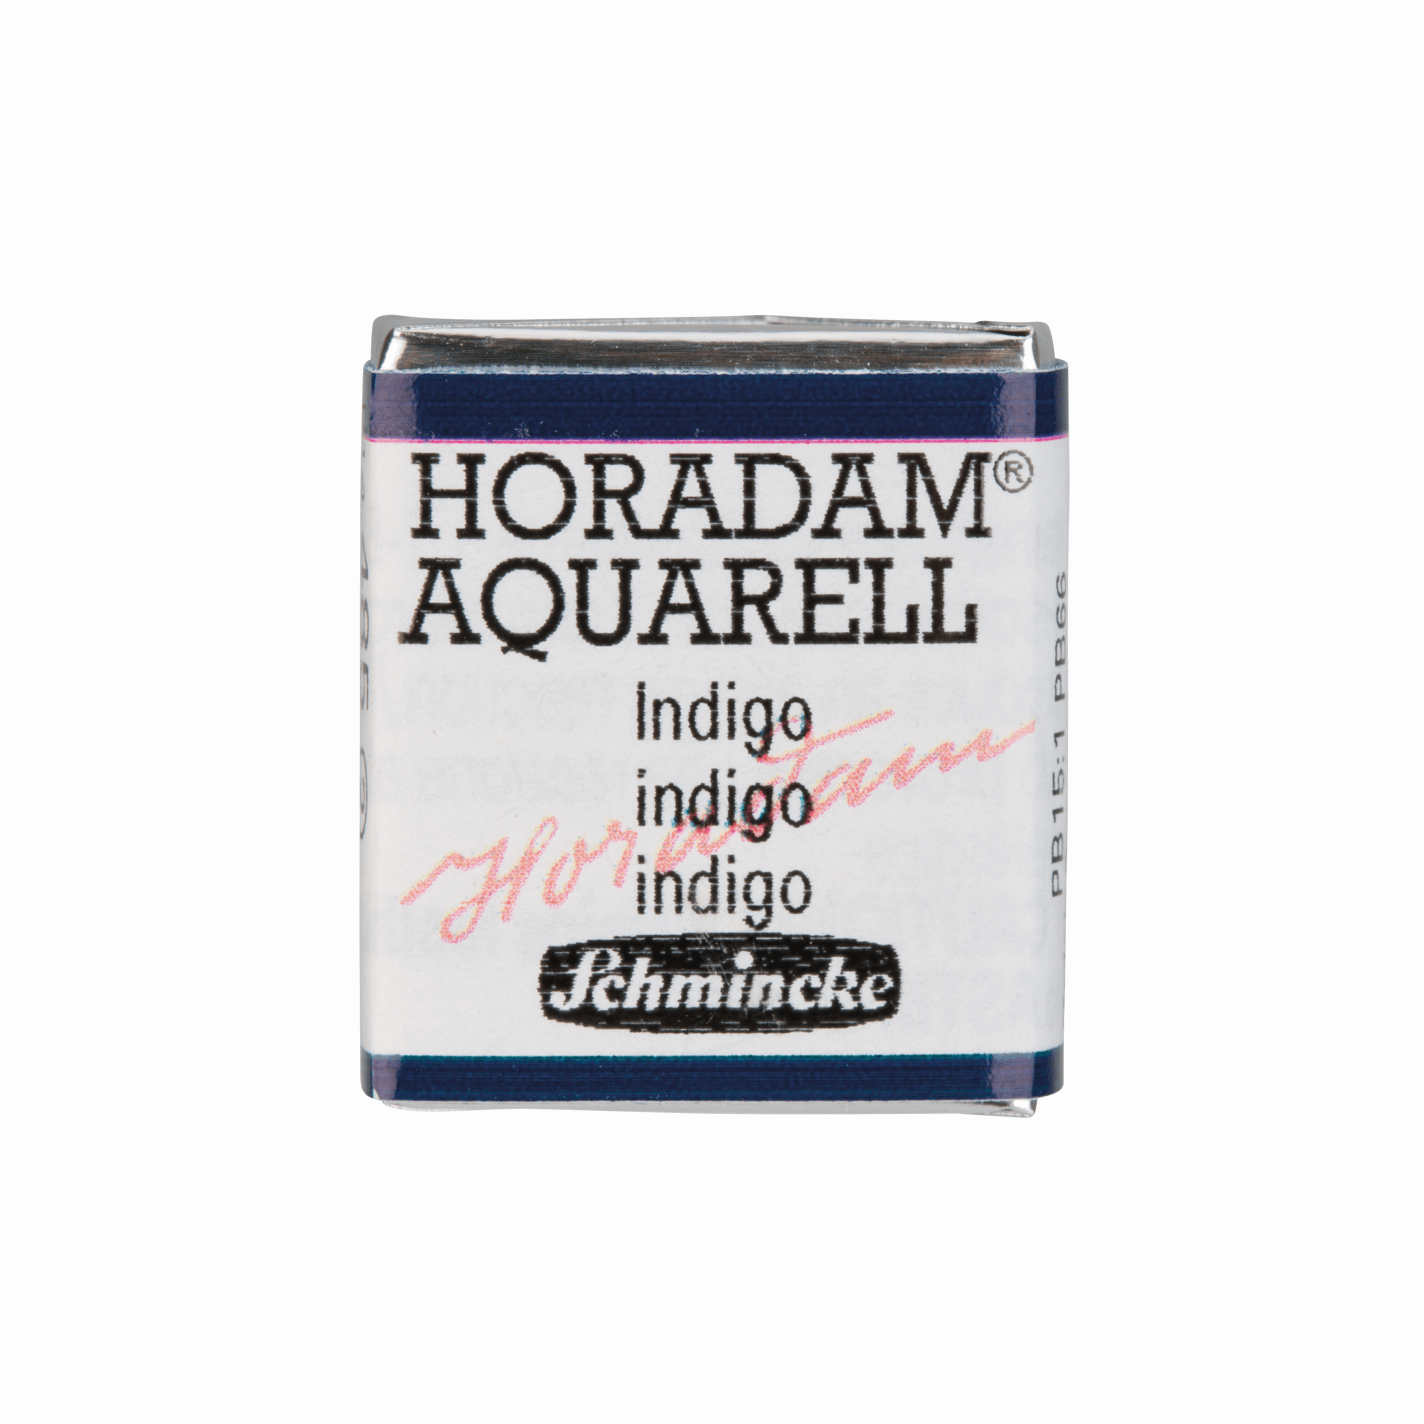 Schmincke Horadam Aquarell pans 1/2 pan Indigo